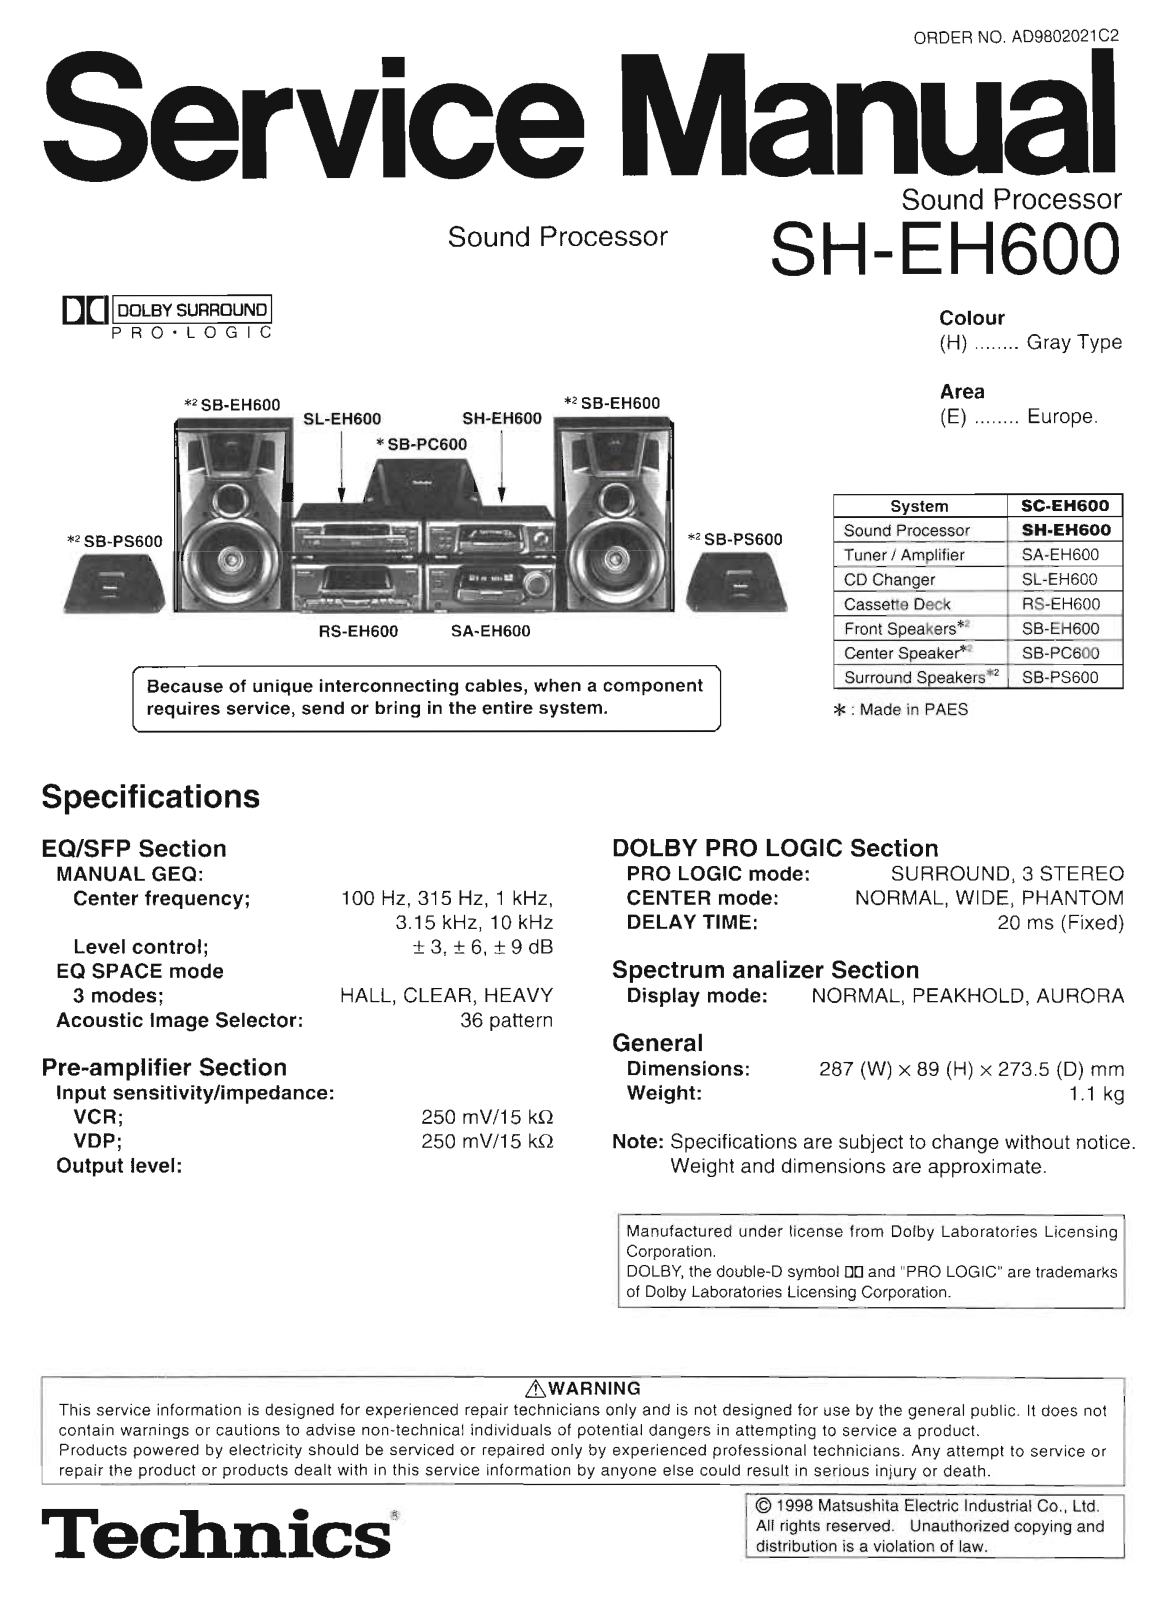 Technics SH-EH600 Service Manual